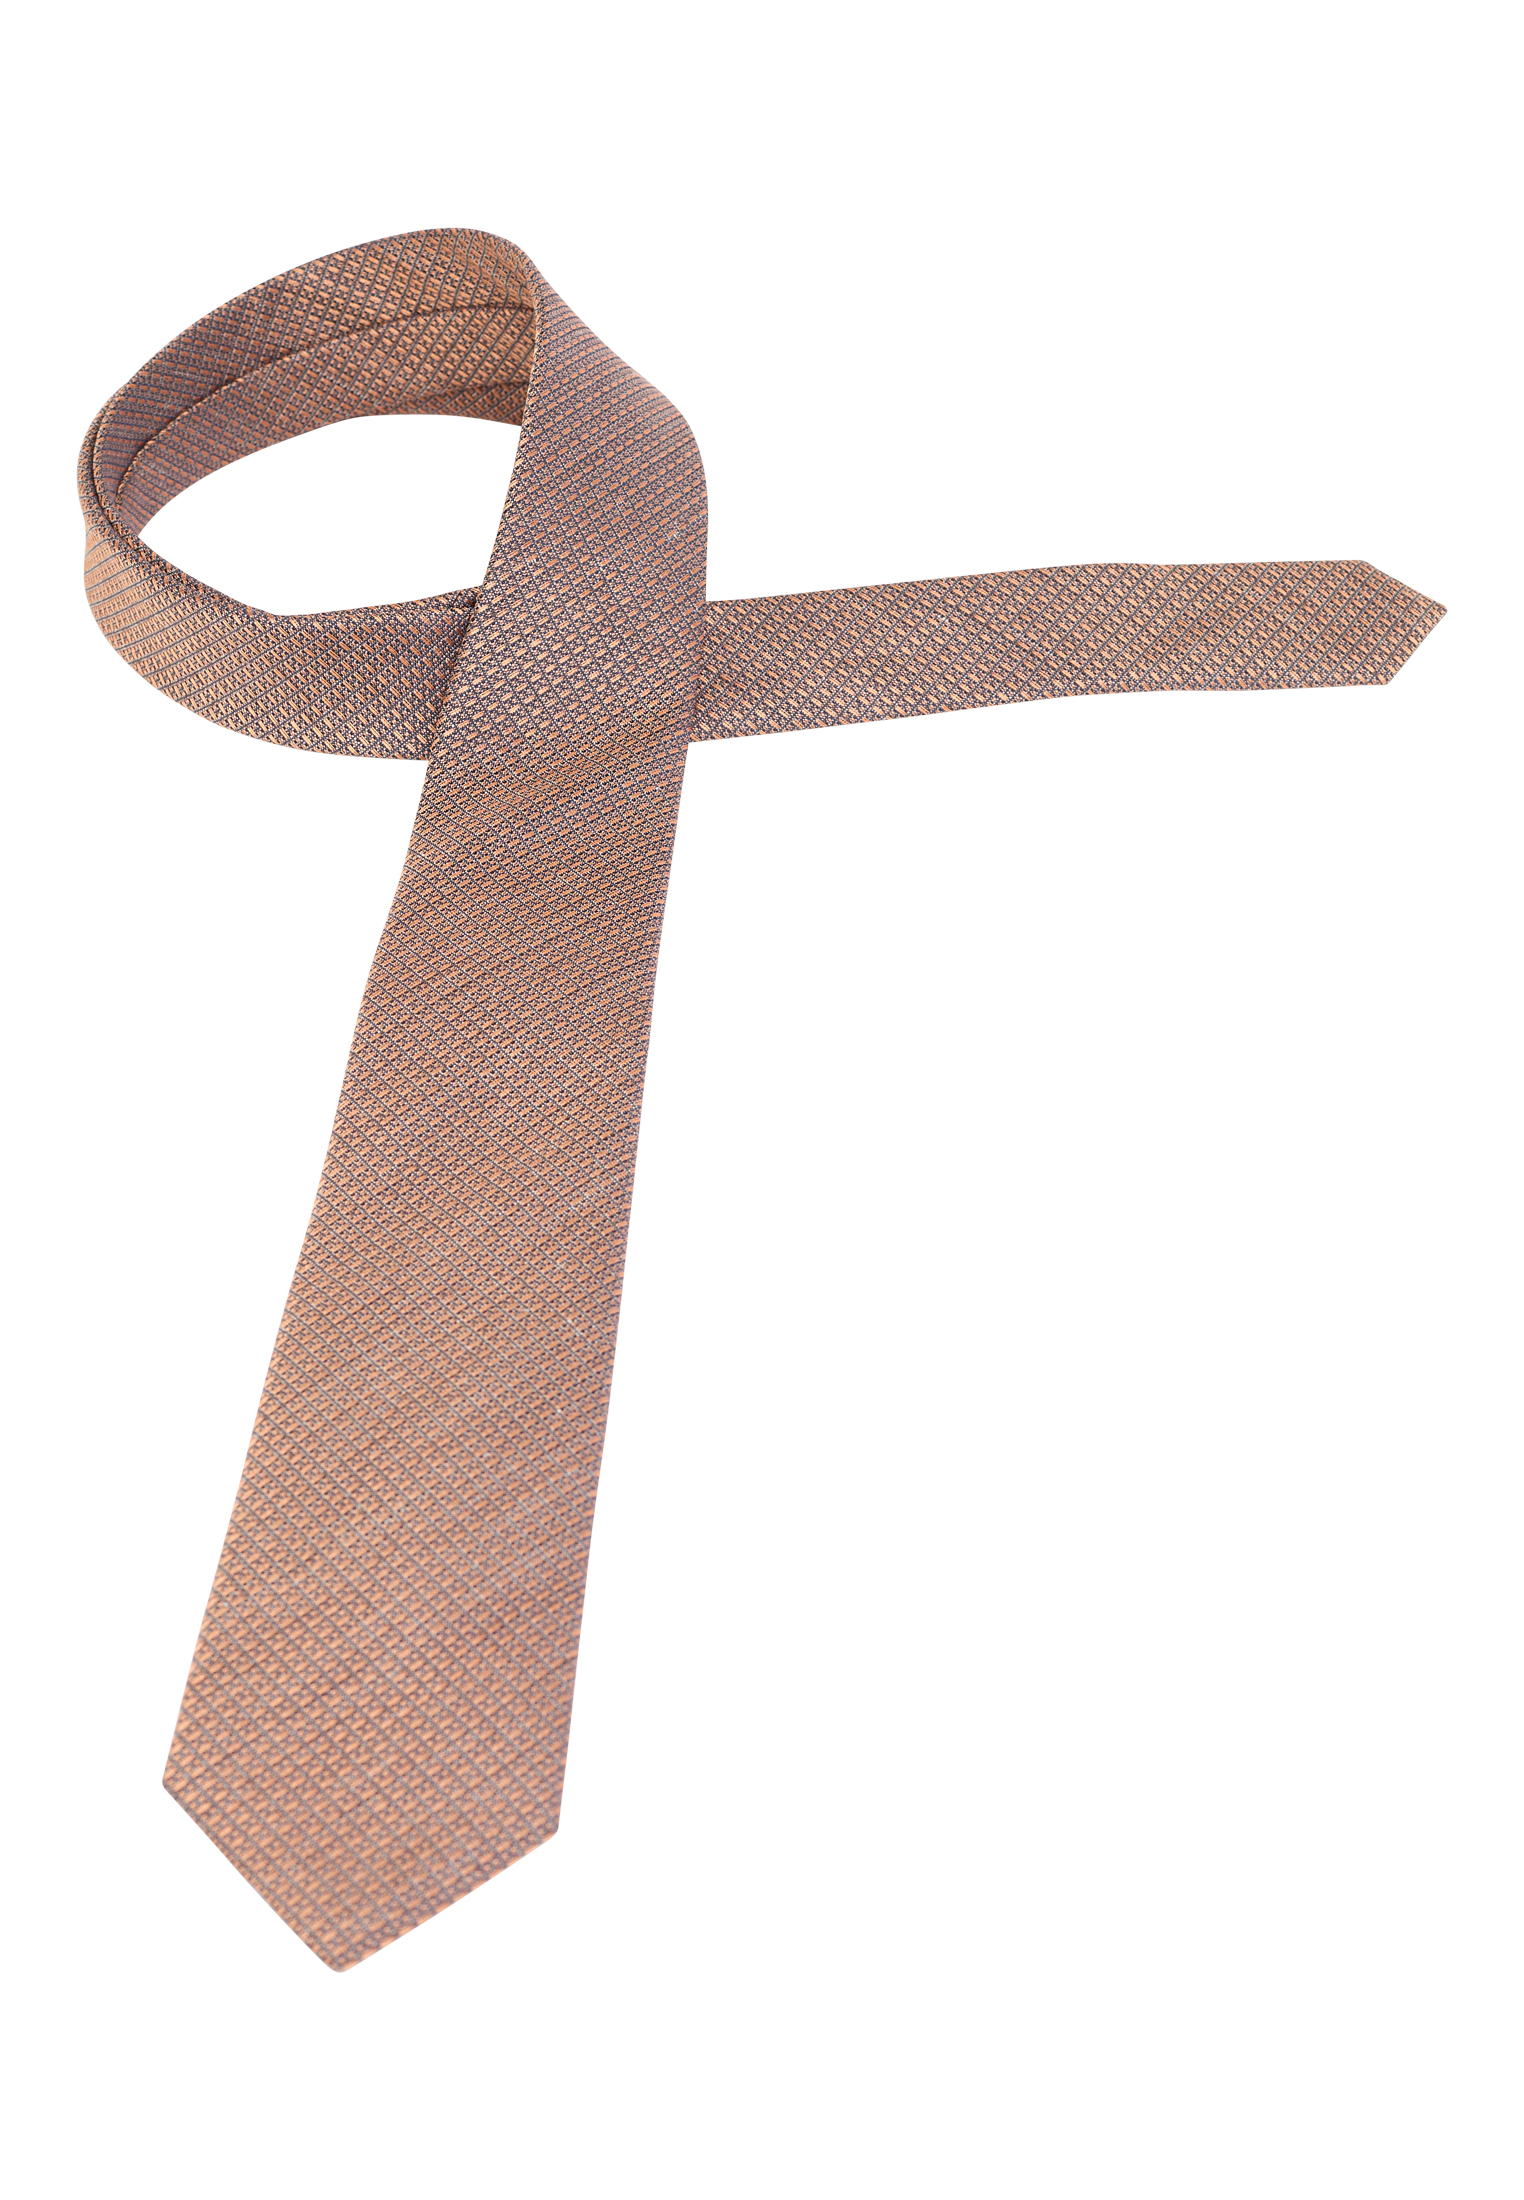 Krawatte in terracotta gemustert | | 142 | terracotta 1AC01949-08-91-142